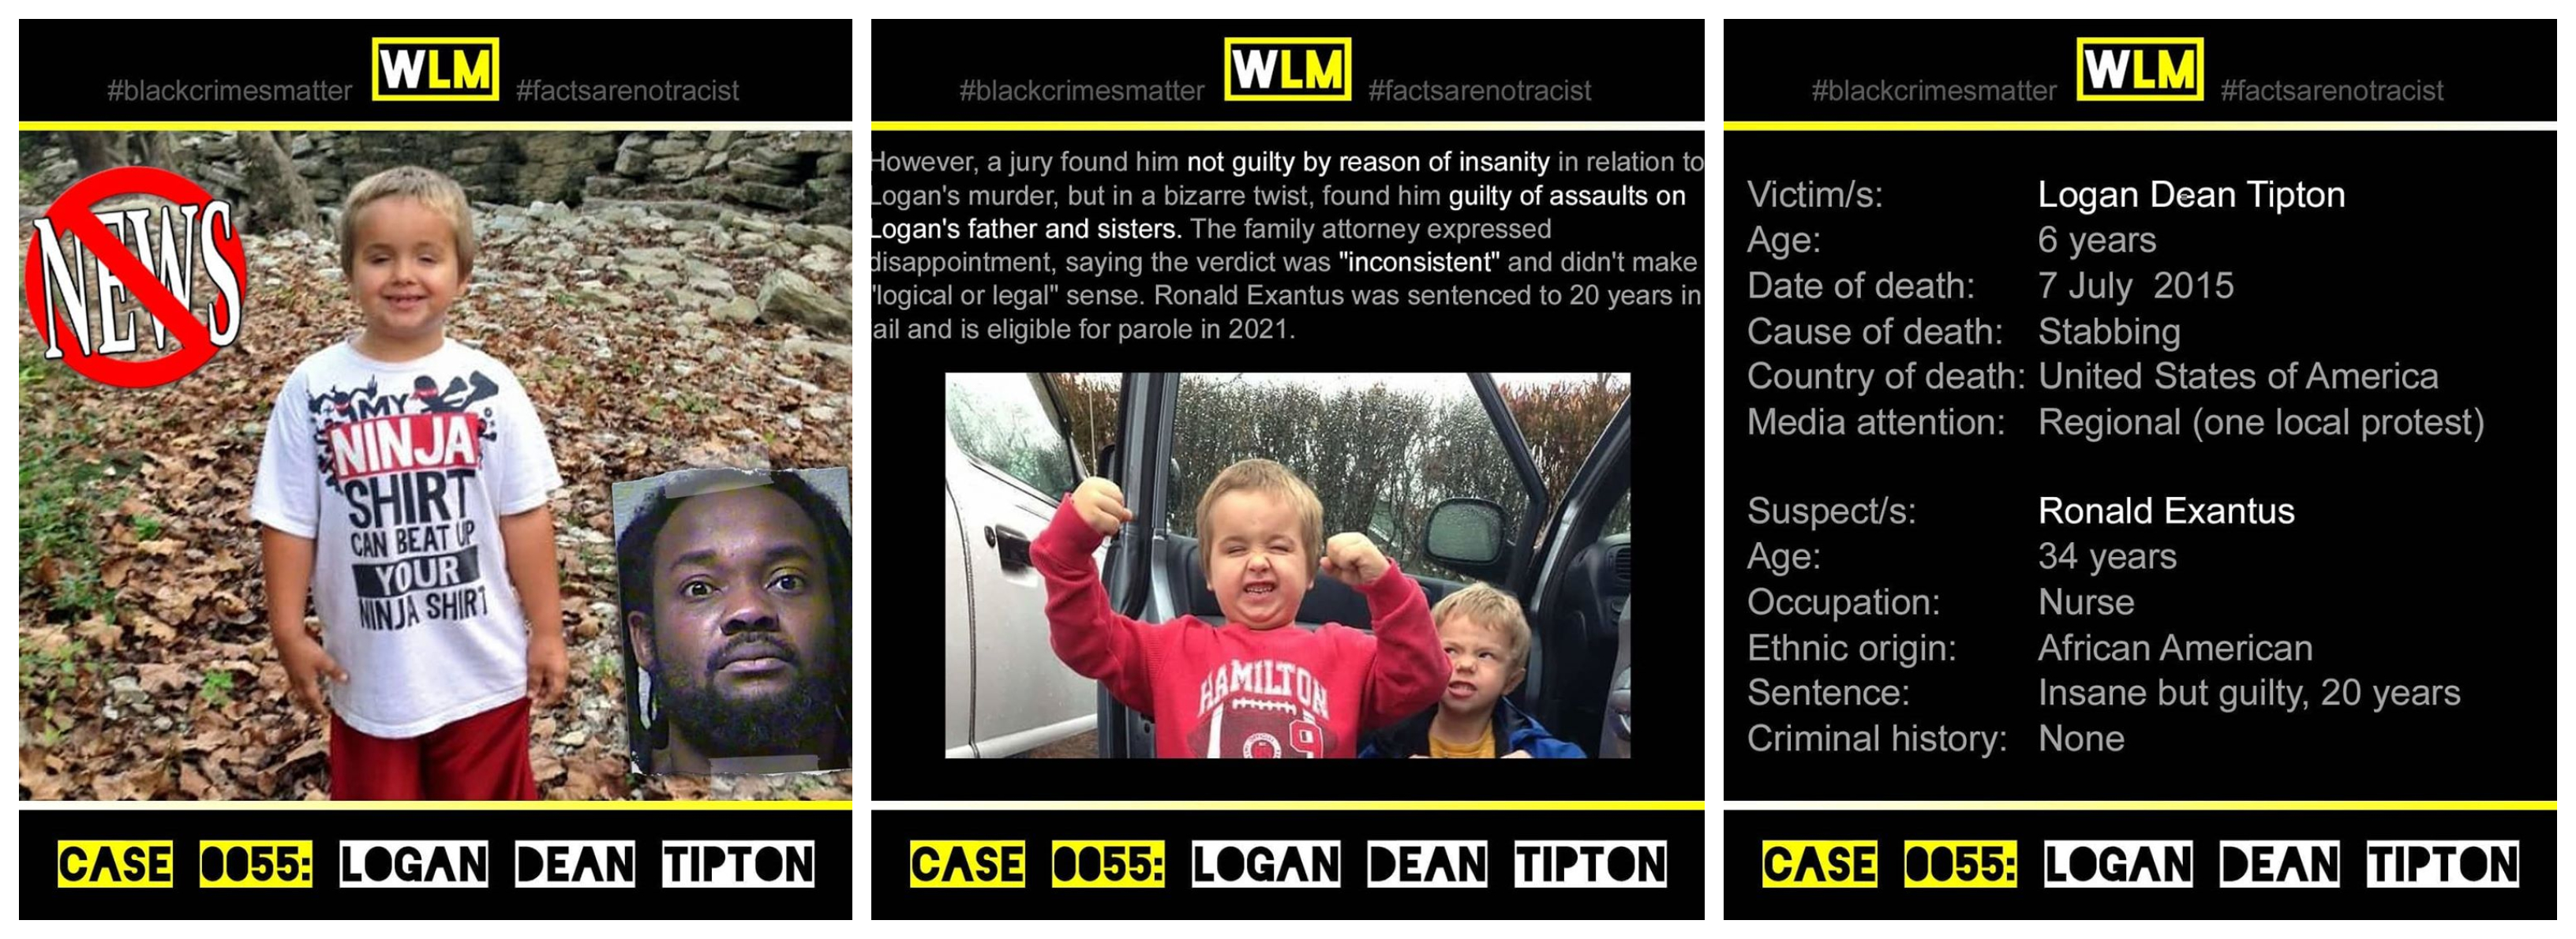 case-055-logan-dean-tipton